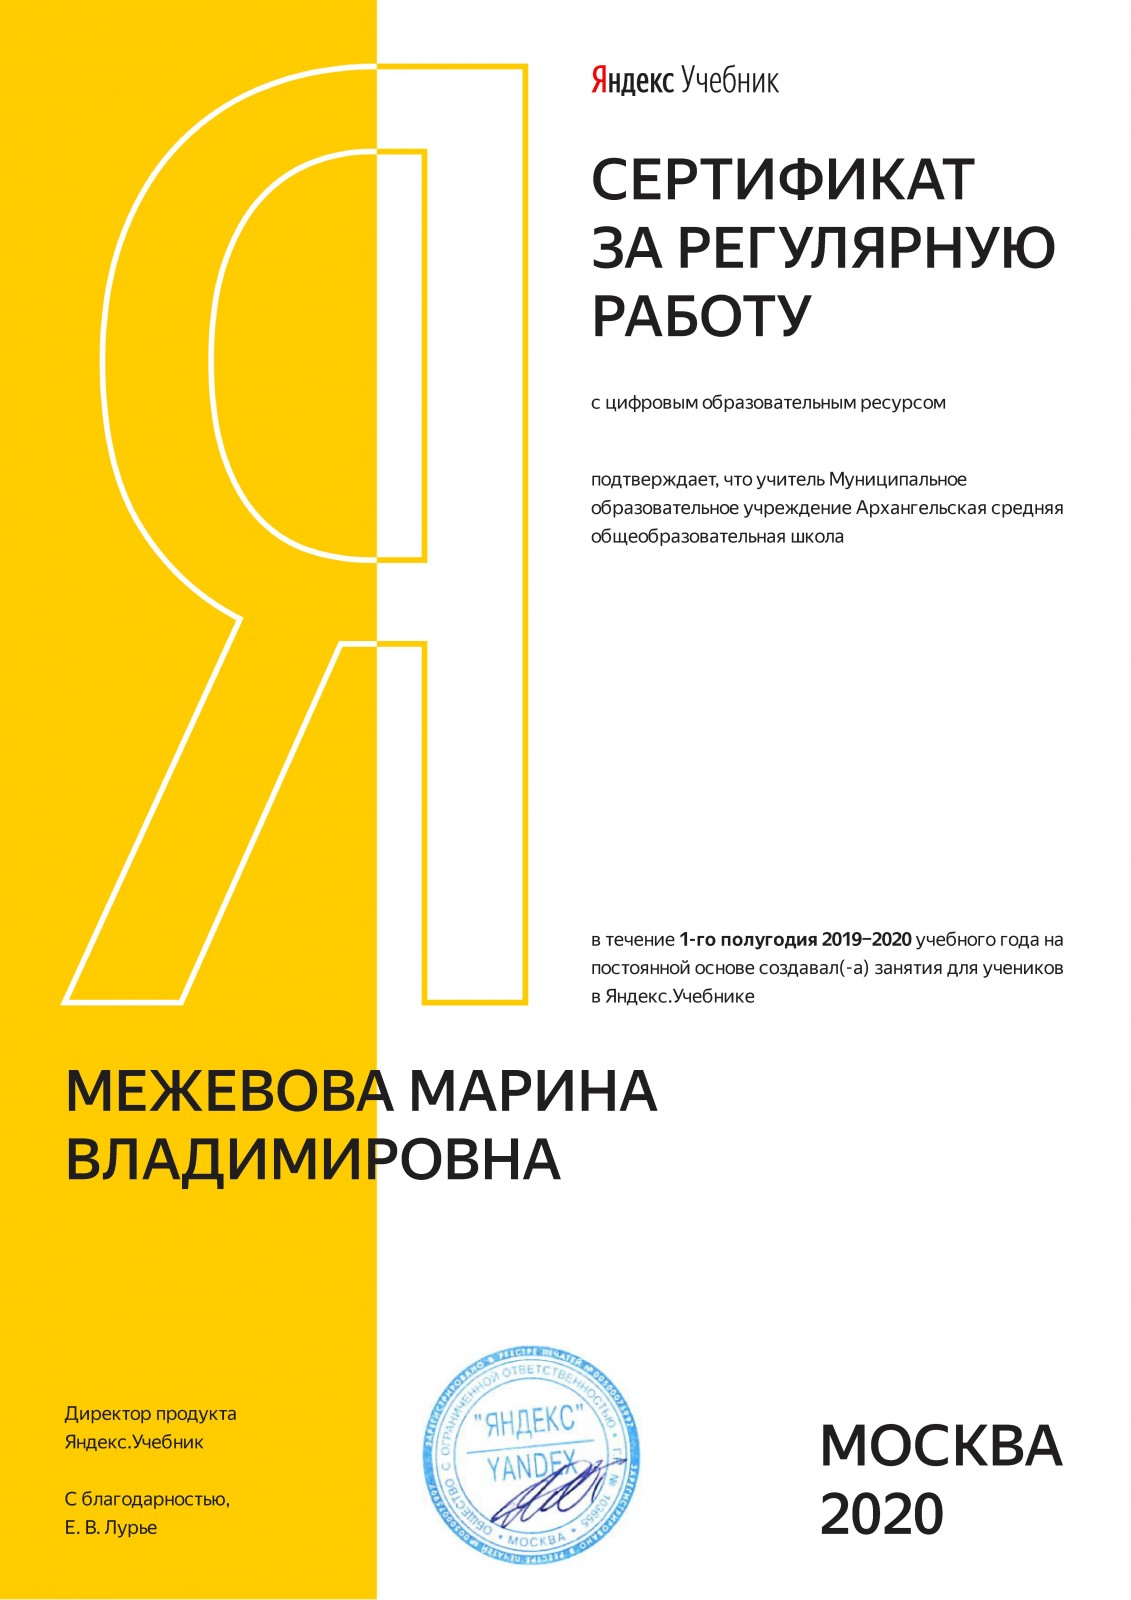 Сертификат Яндекс учебника